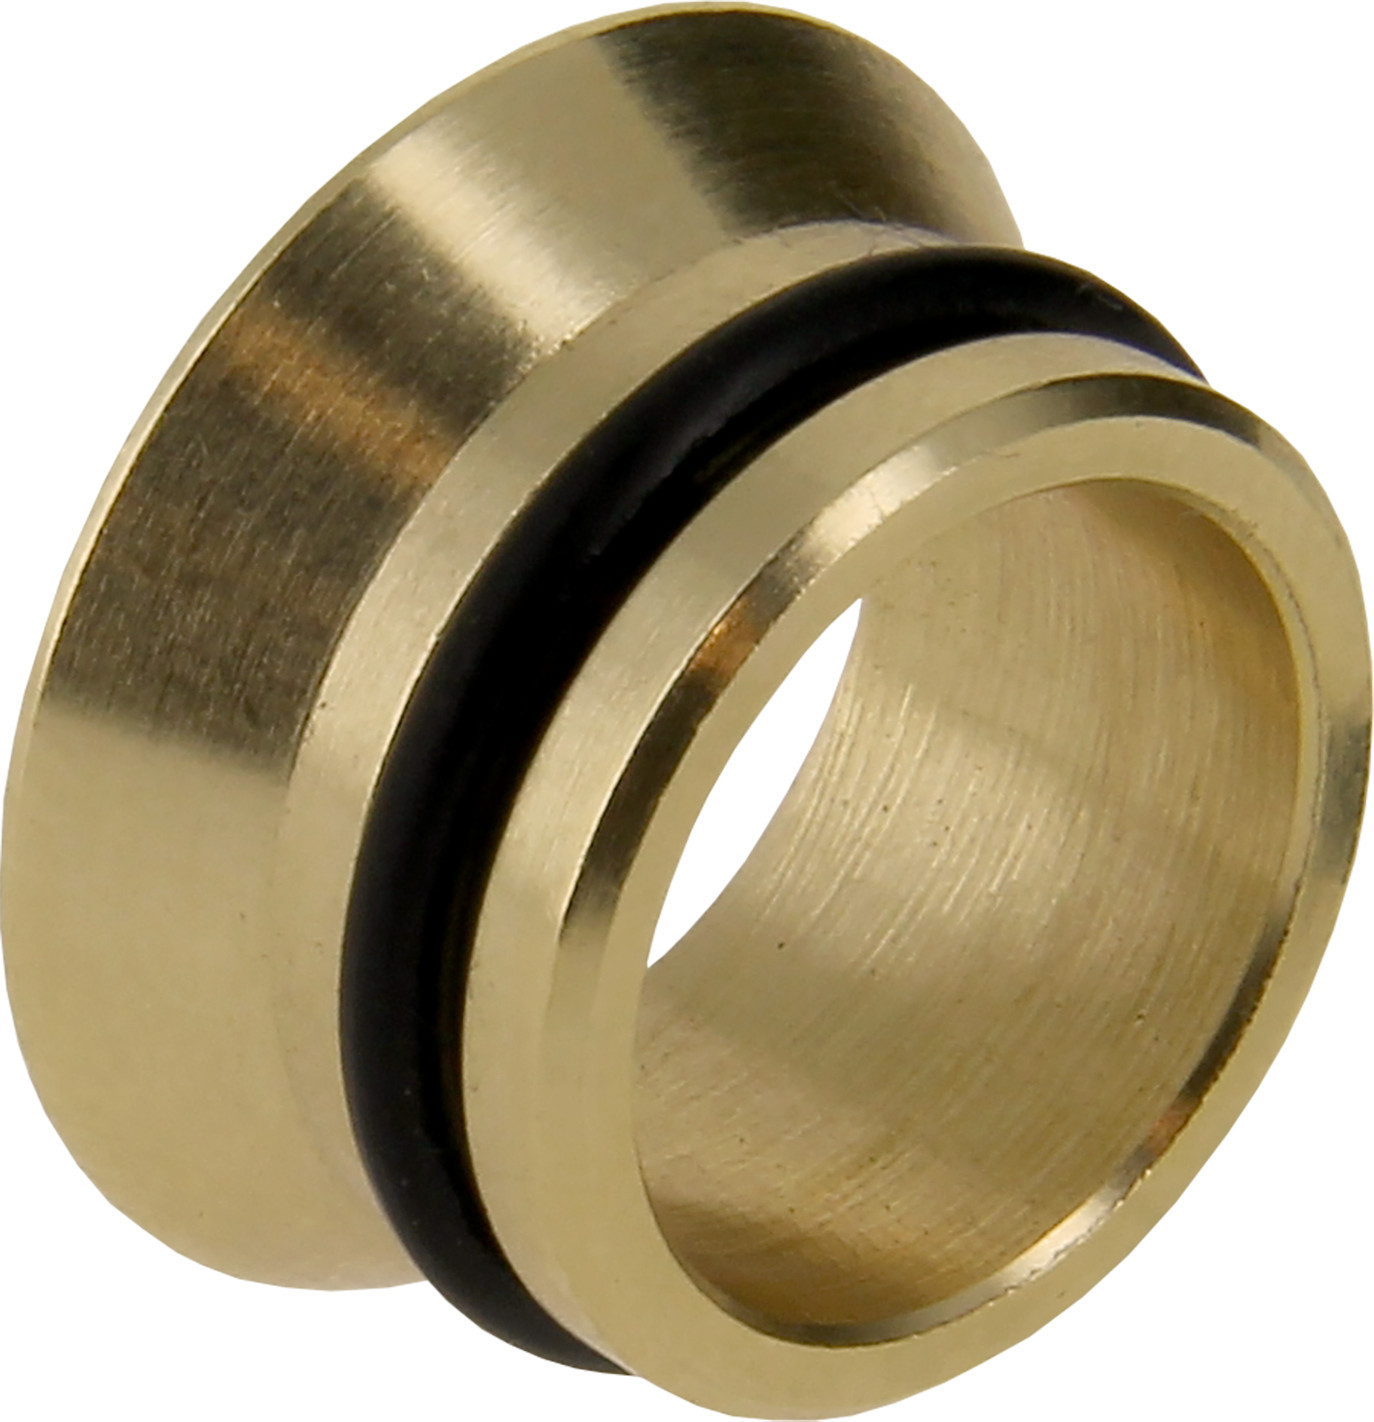 Bonfix knelkoppeling - Insert met O-ring vlakdichtend - 15mm - Messing